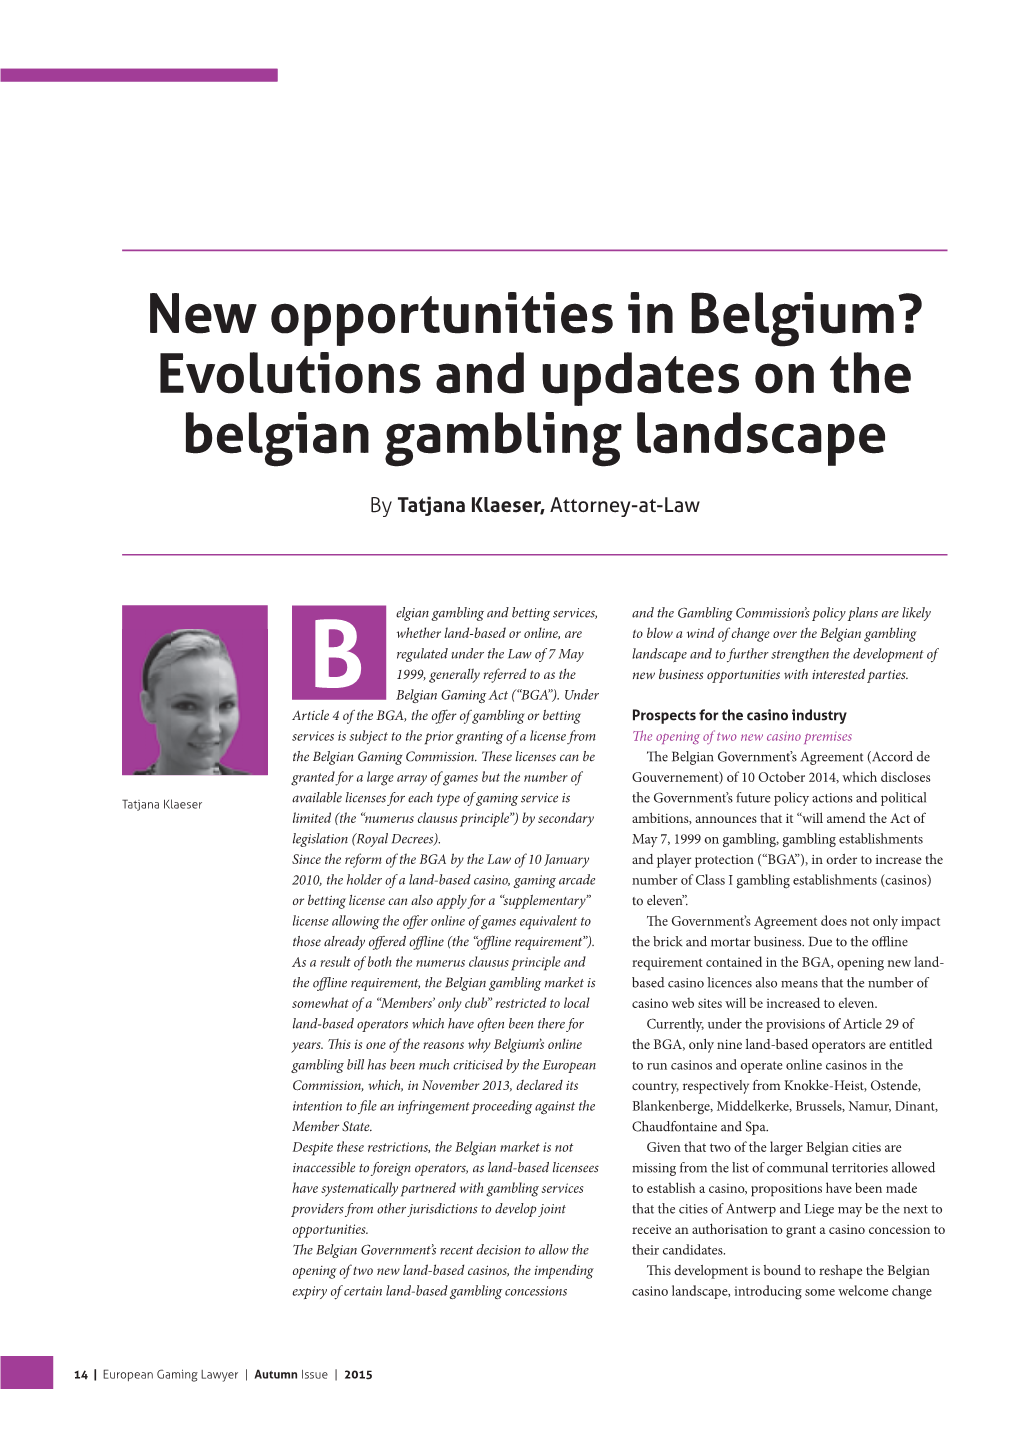 New Opportunities in Belgium? Evolutions and Updates on the Belgian Gambling Landscape